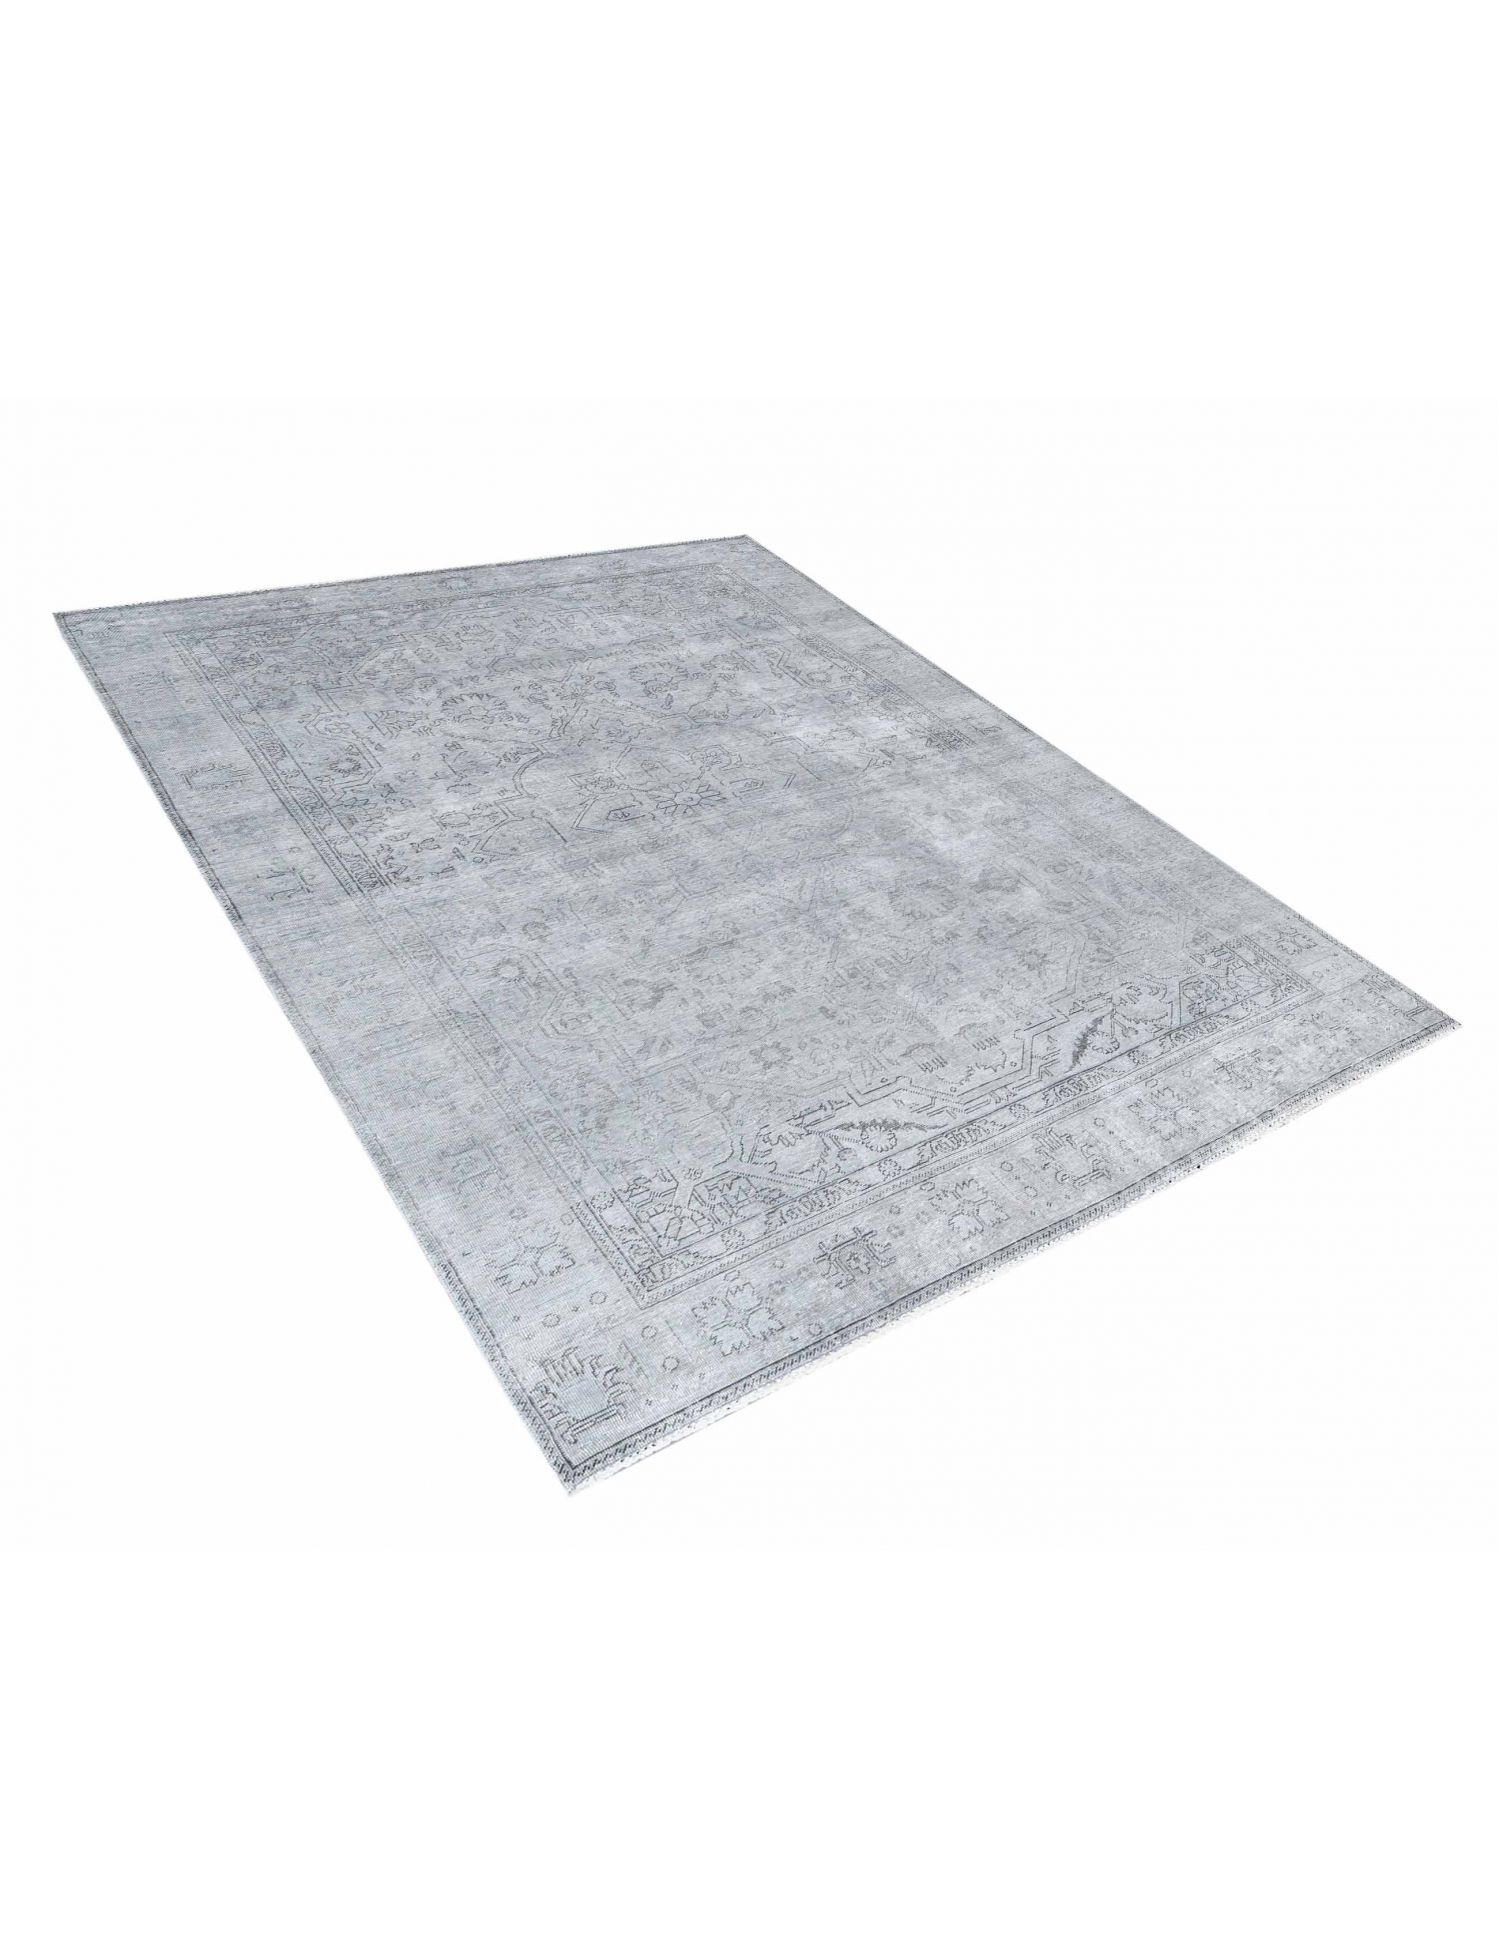 Vintage Carpet  grey <br/>298 x 193 cm